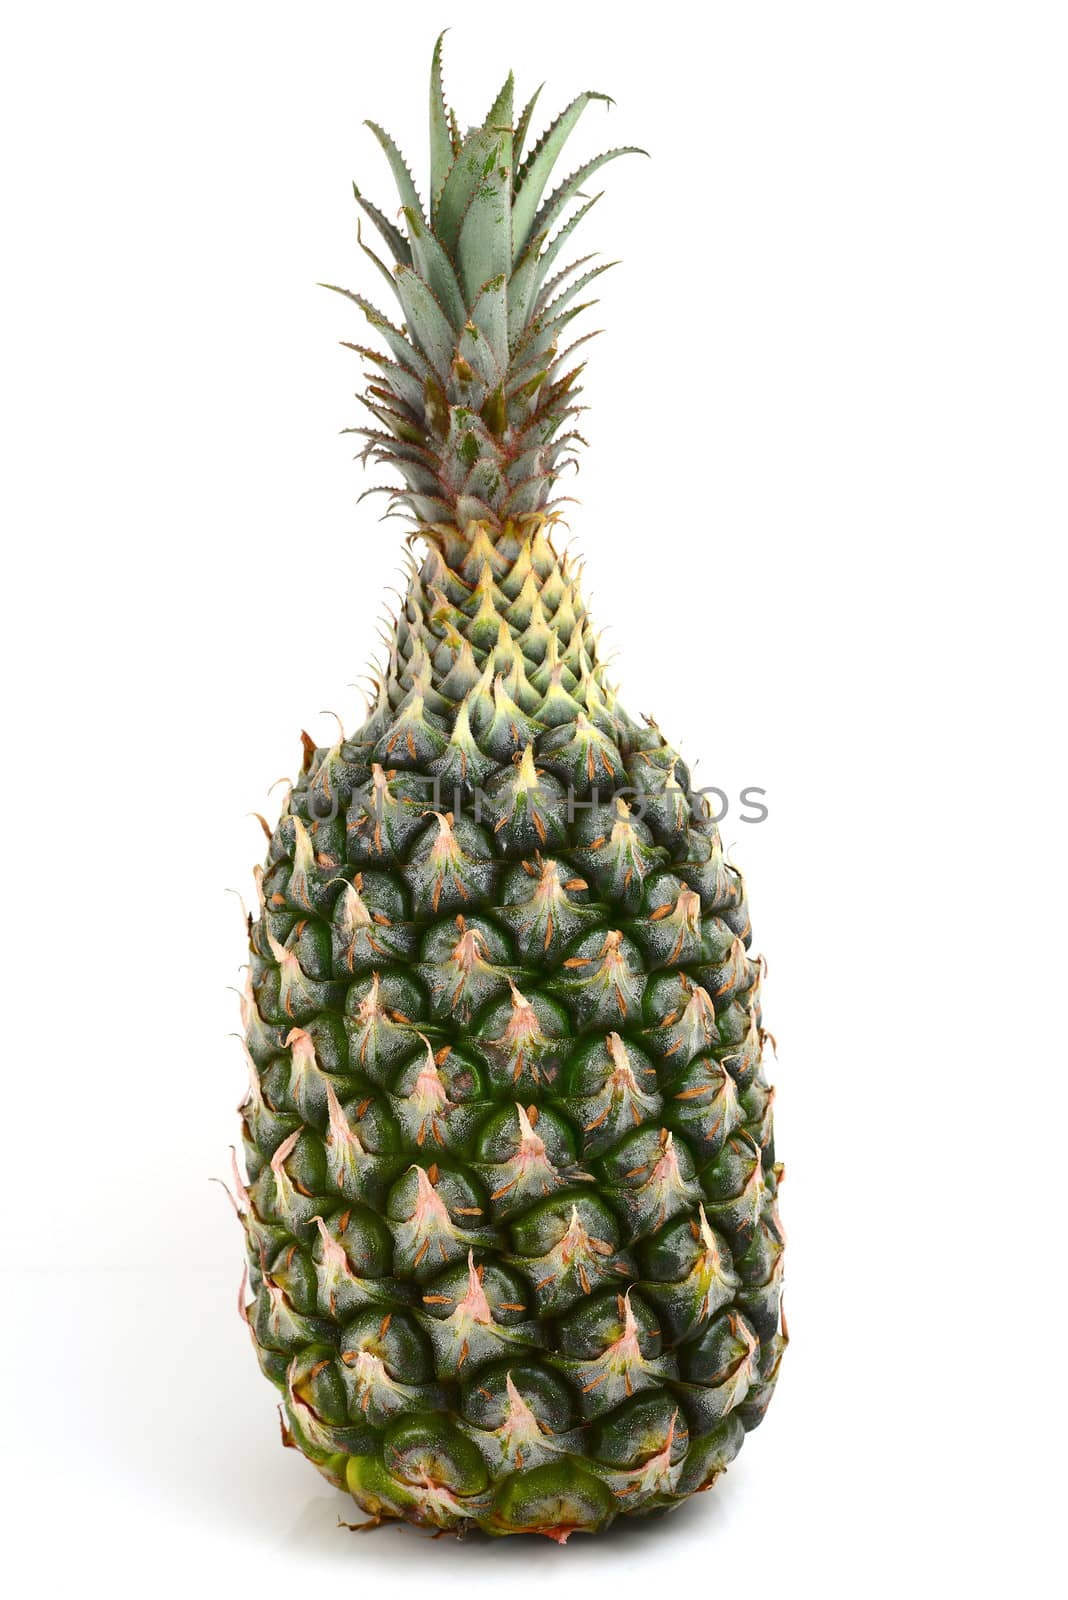 pineapple by antpkr